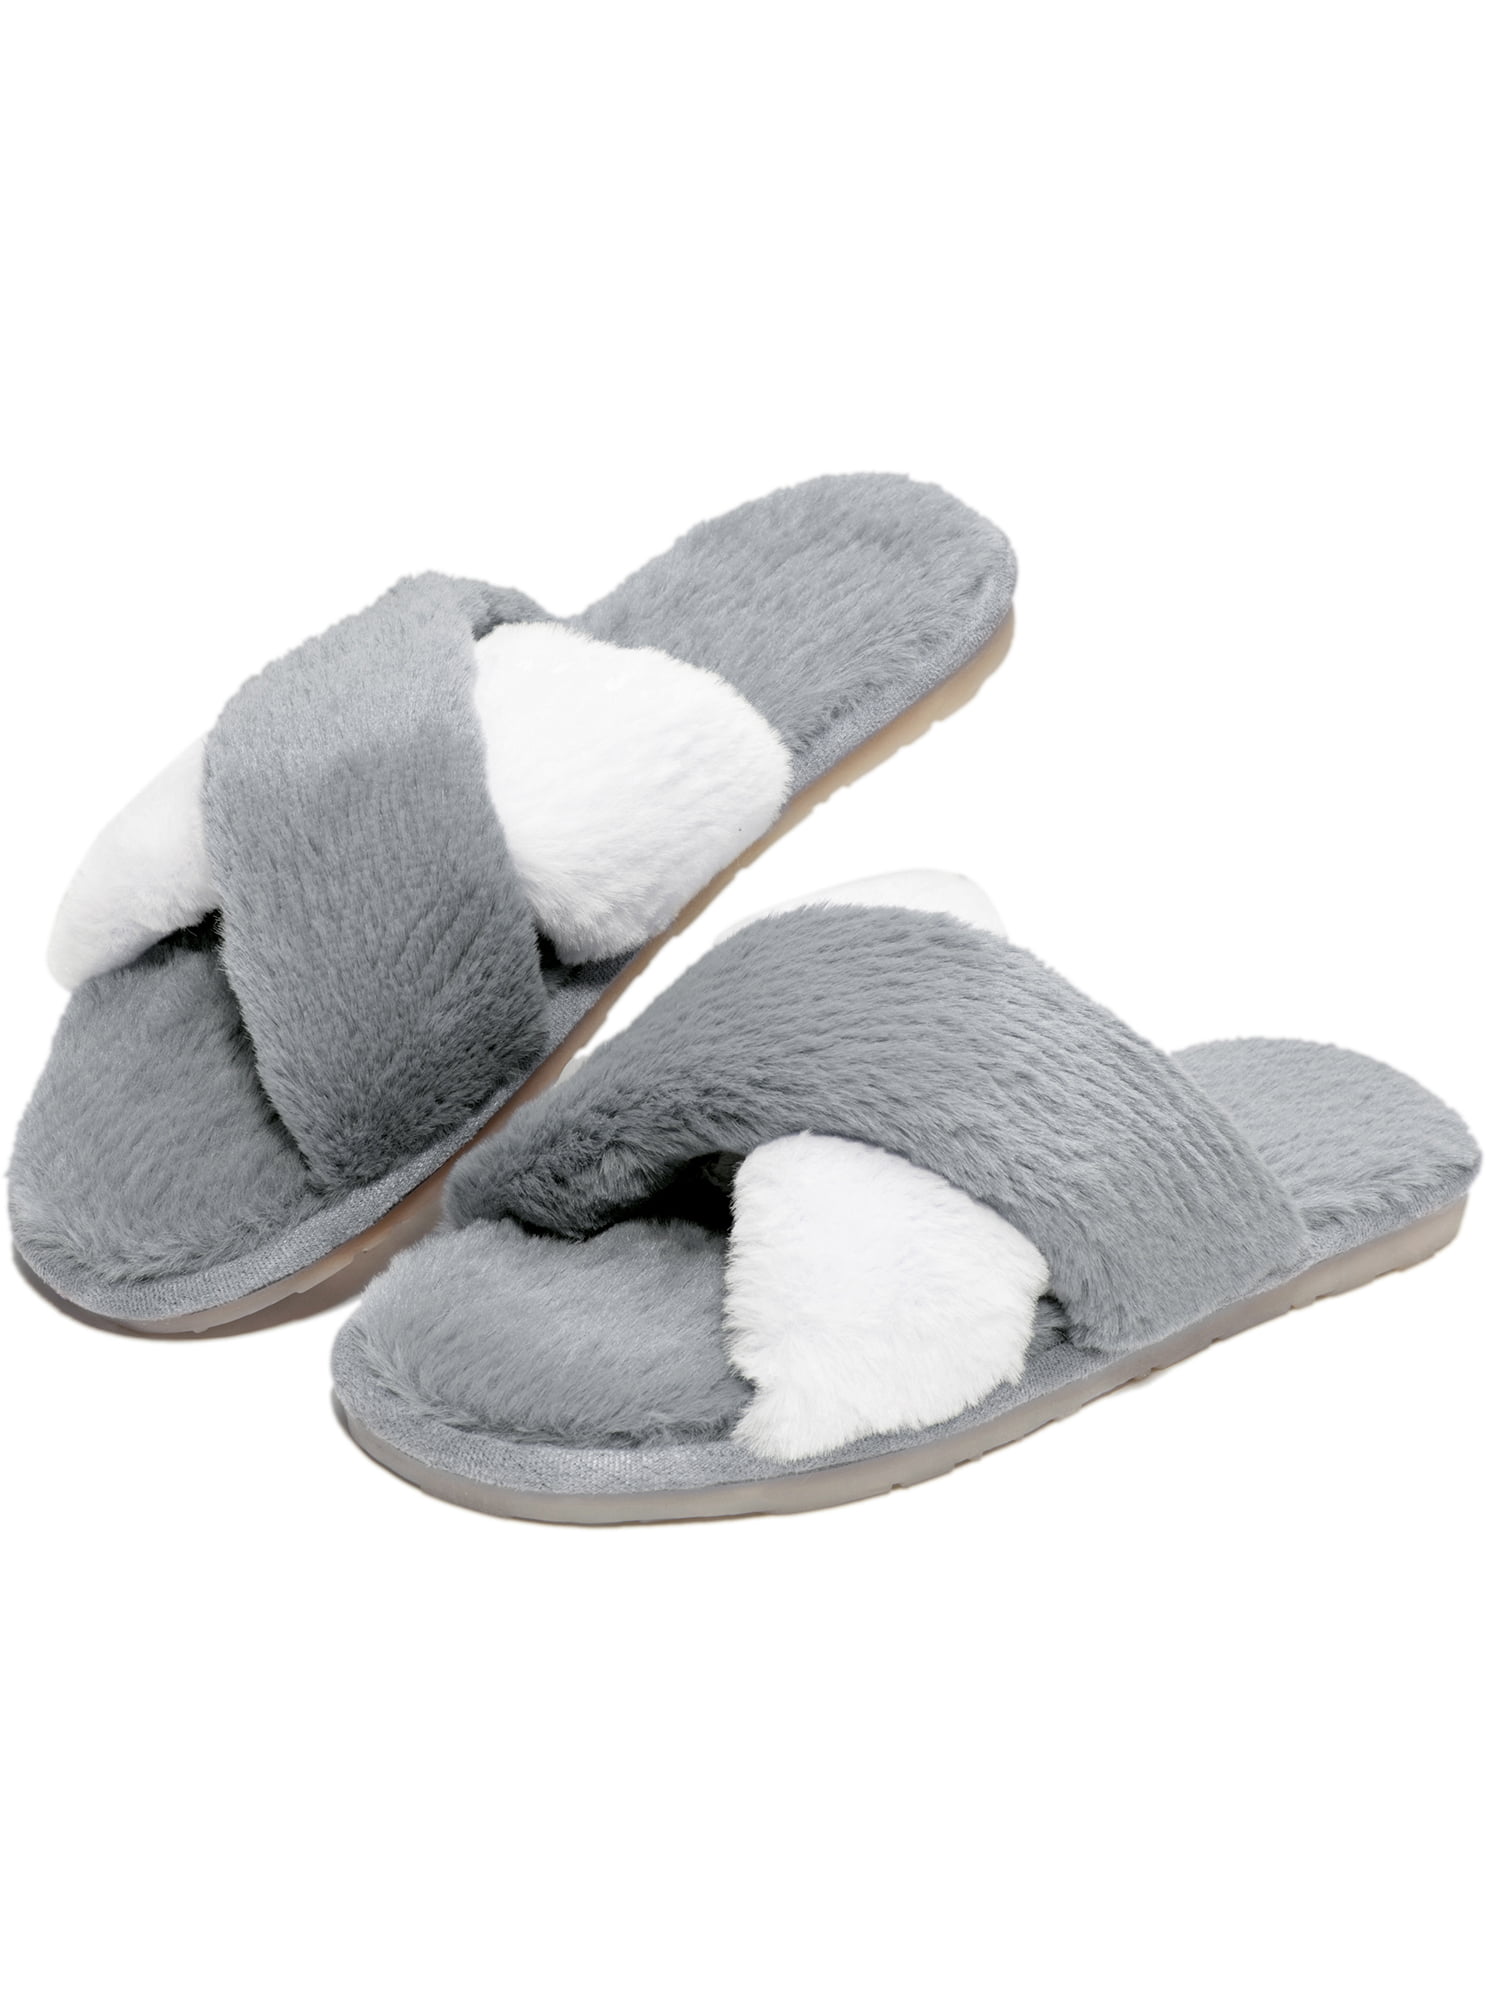 Ladies Grey Comfort Soft Warm Furry Bedroom Slip On Slippers Mules 